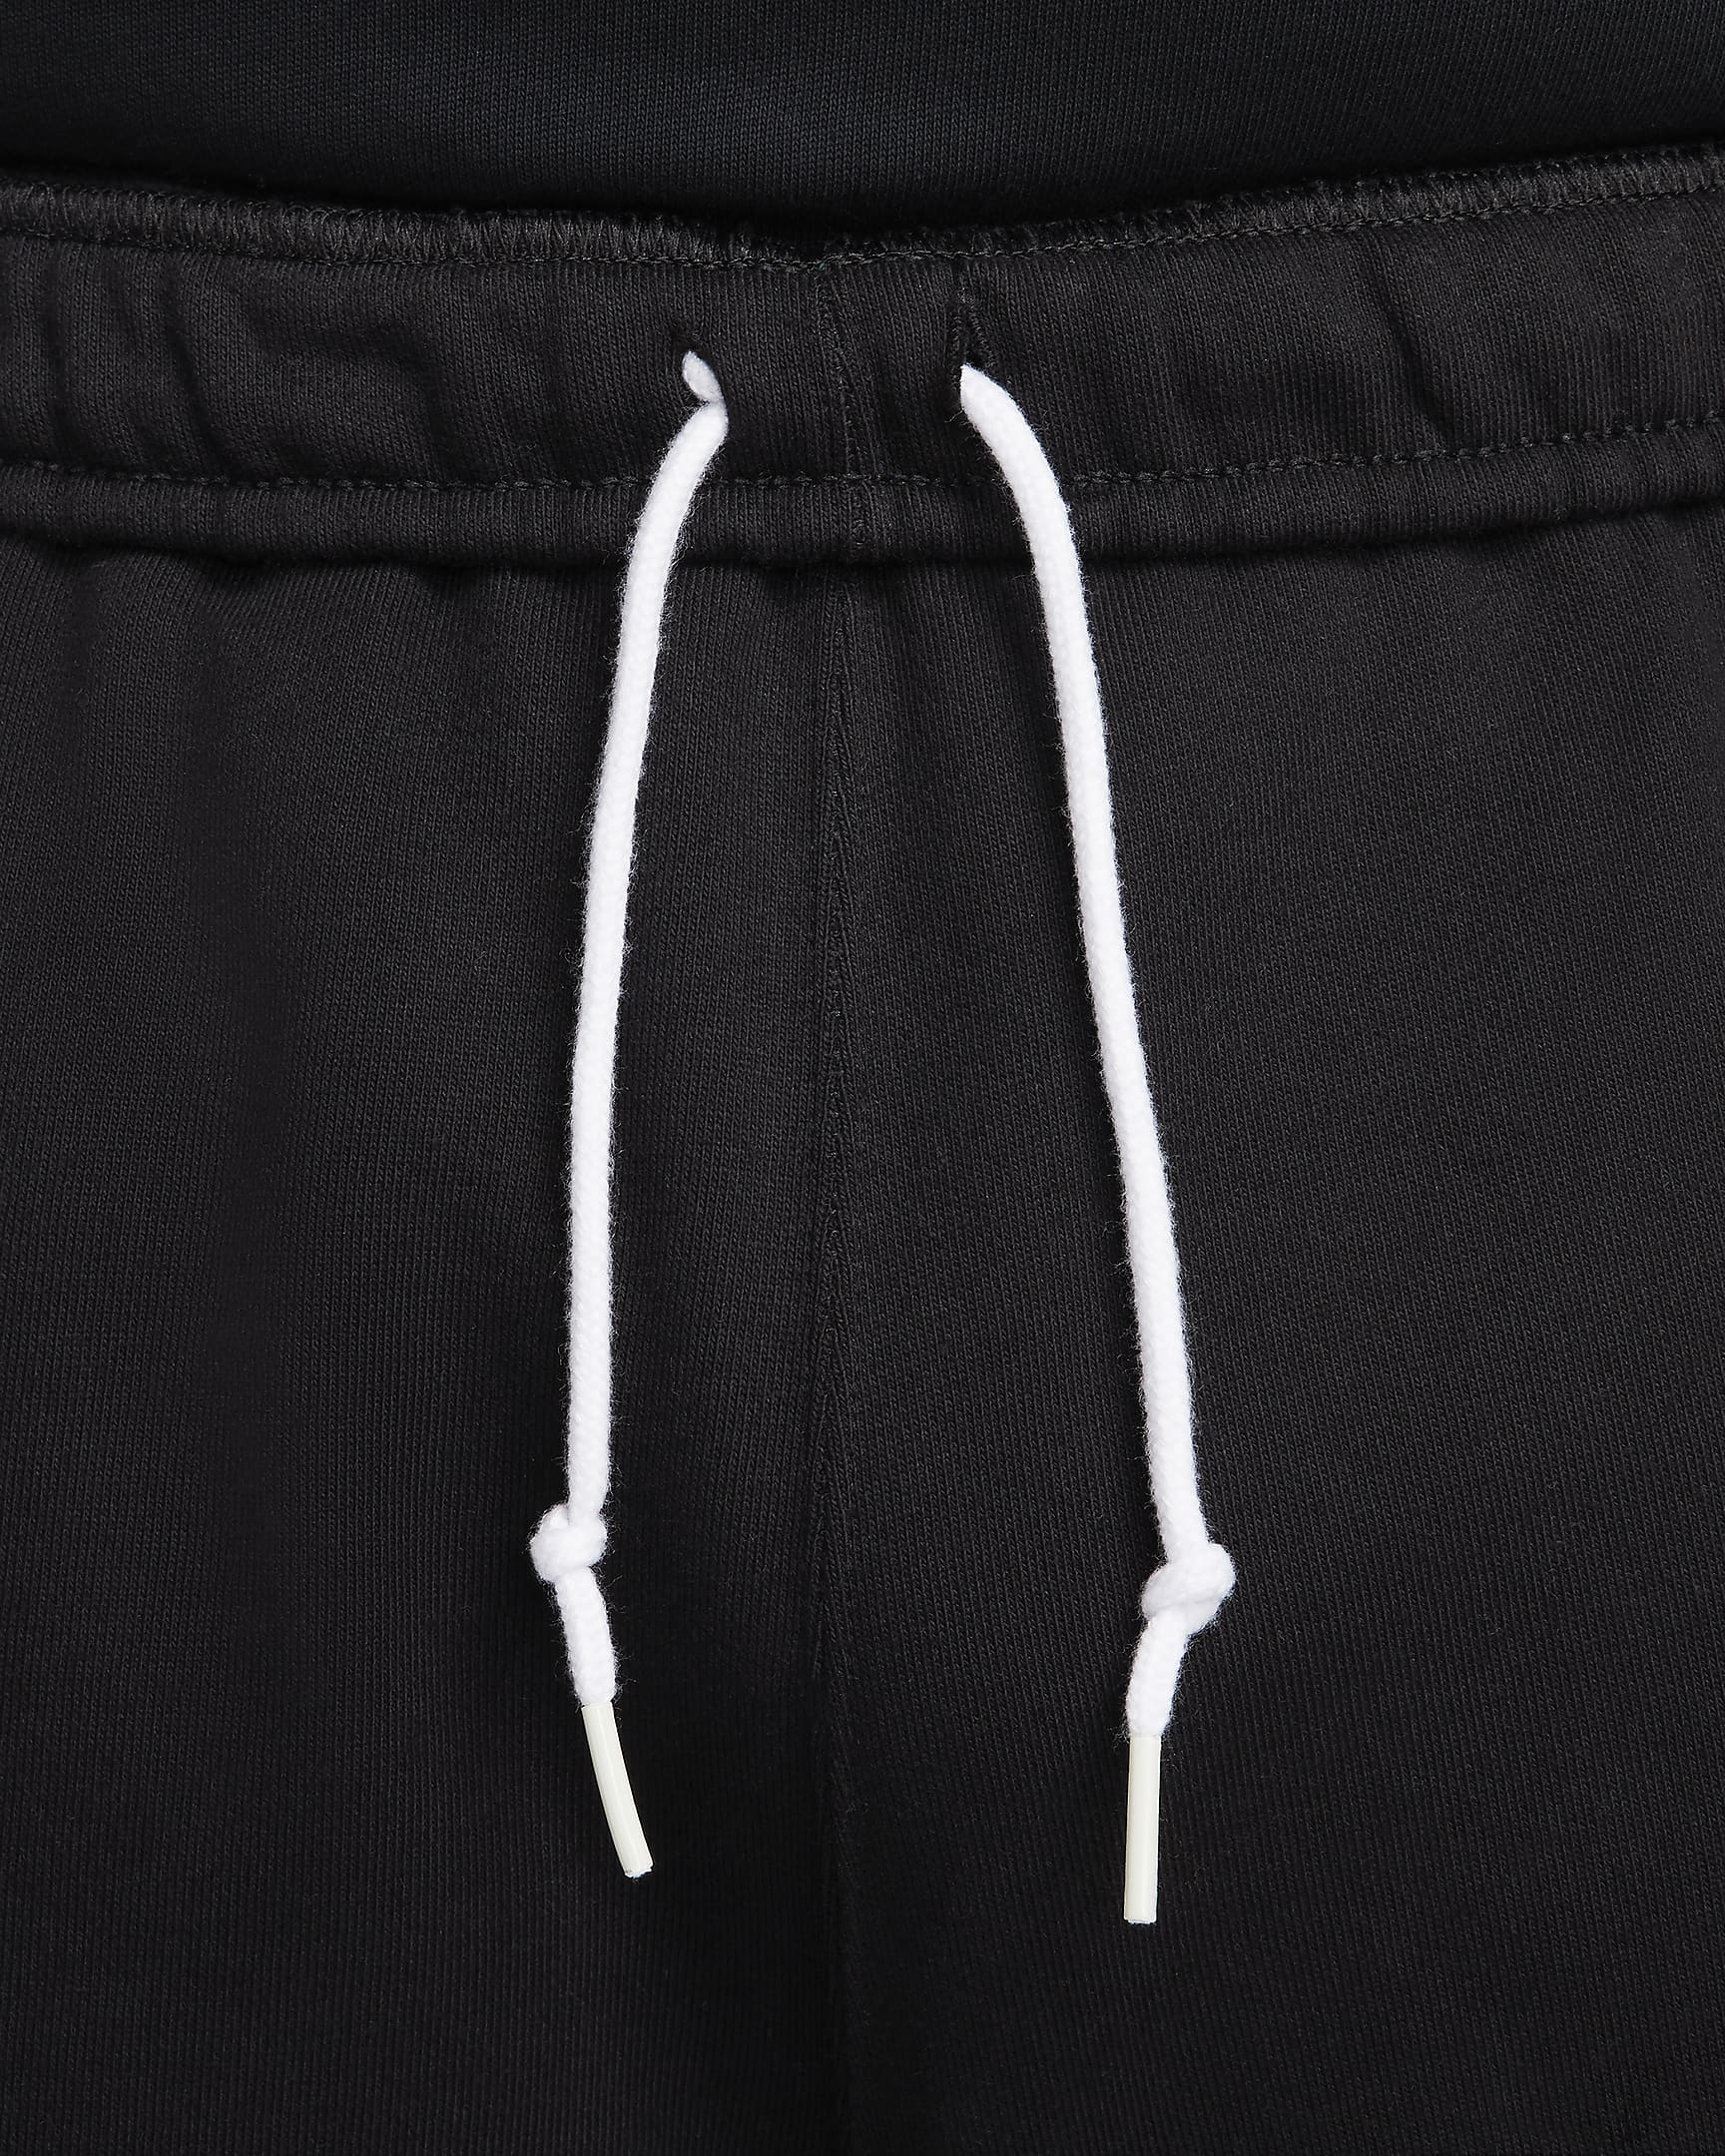 Nike Solo Swoosh Men's Fleece Shorts. Nike CA